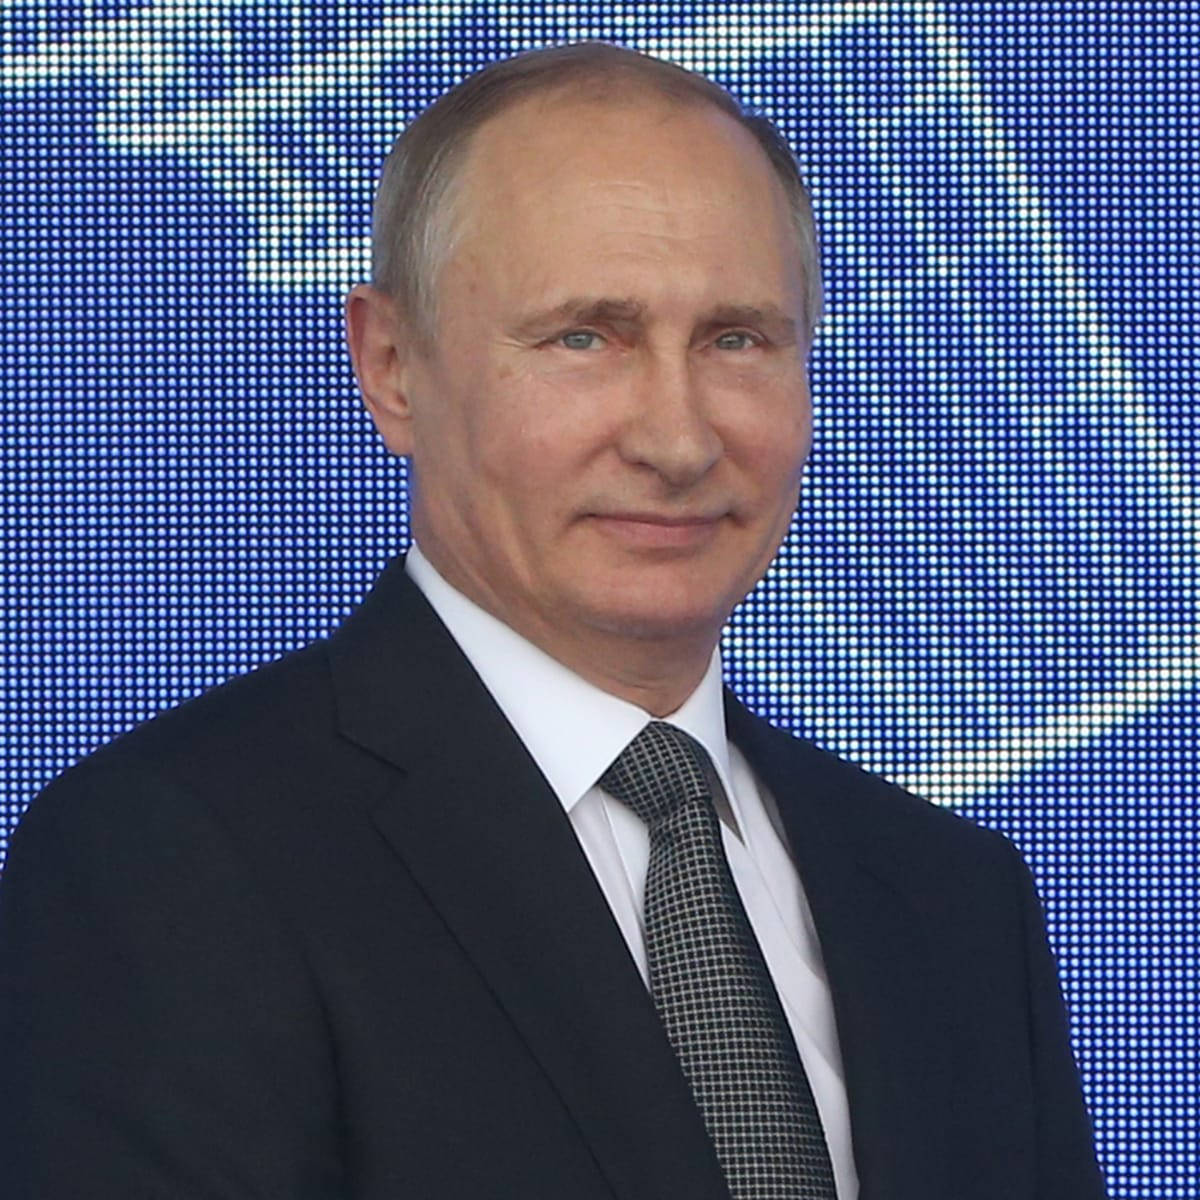 Russian President Vladimir Putin Smiling Against A Blue Background Wallpaper